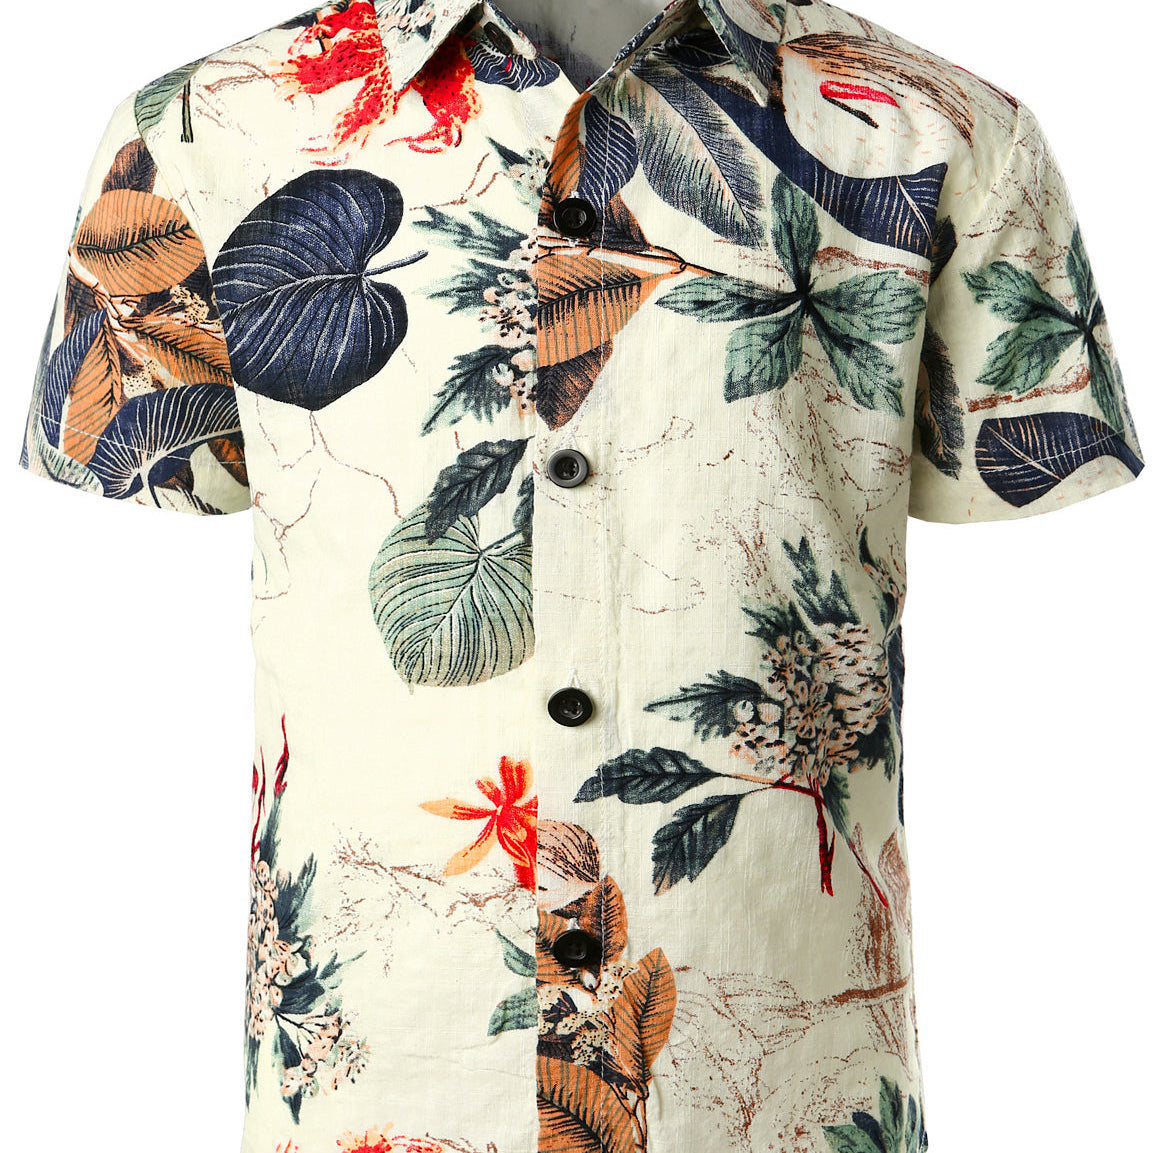 Boy's Pineapple Print Tropical Aloha Holiday Beach White Short Sleeve Shirt